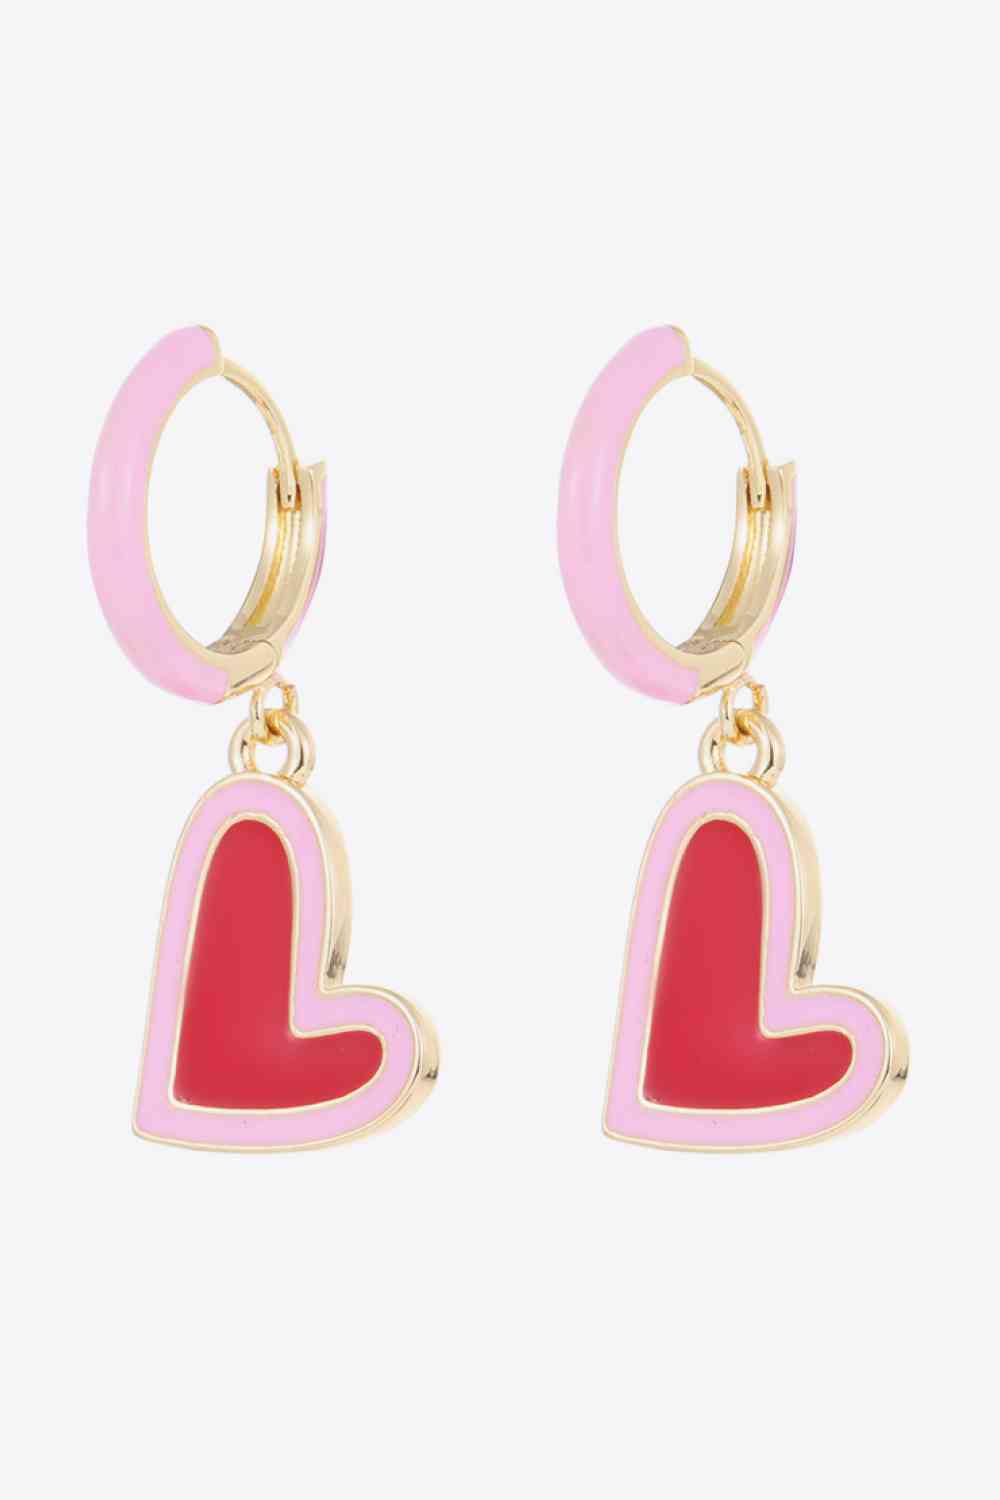 Stainless Steel Concentric Open Love Heart Slinky Drop Hook Earrings (Pair)